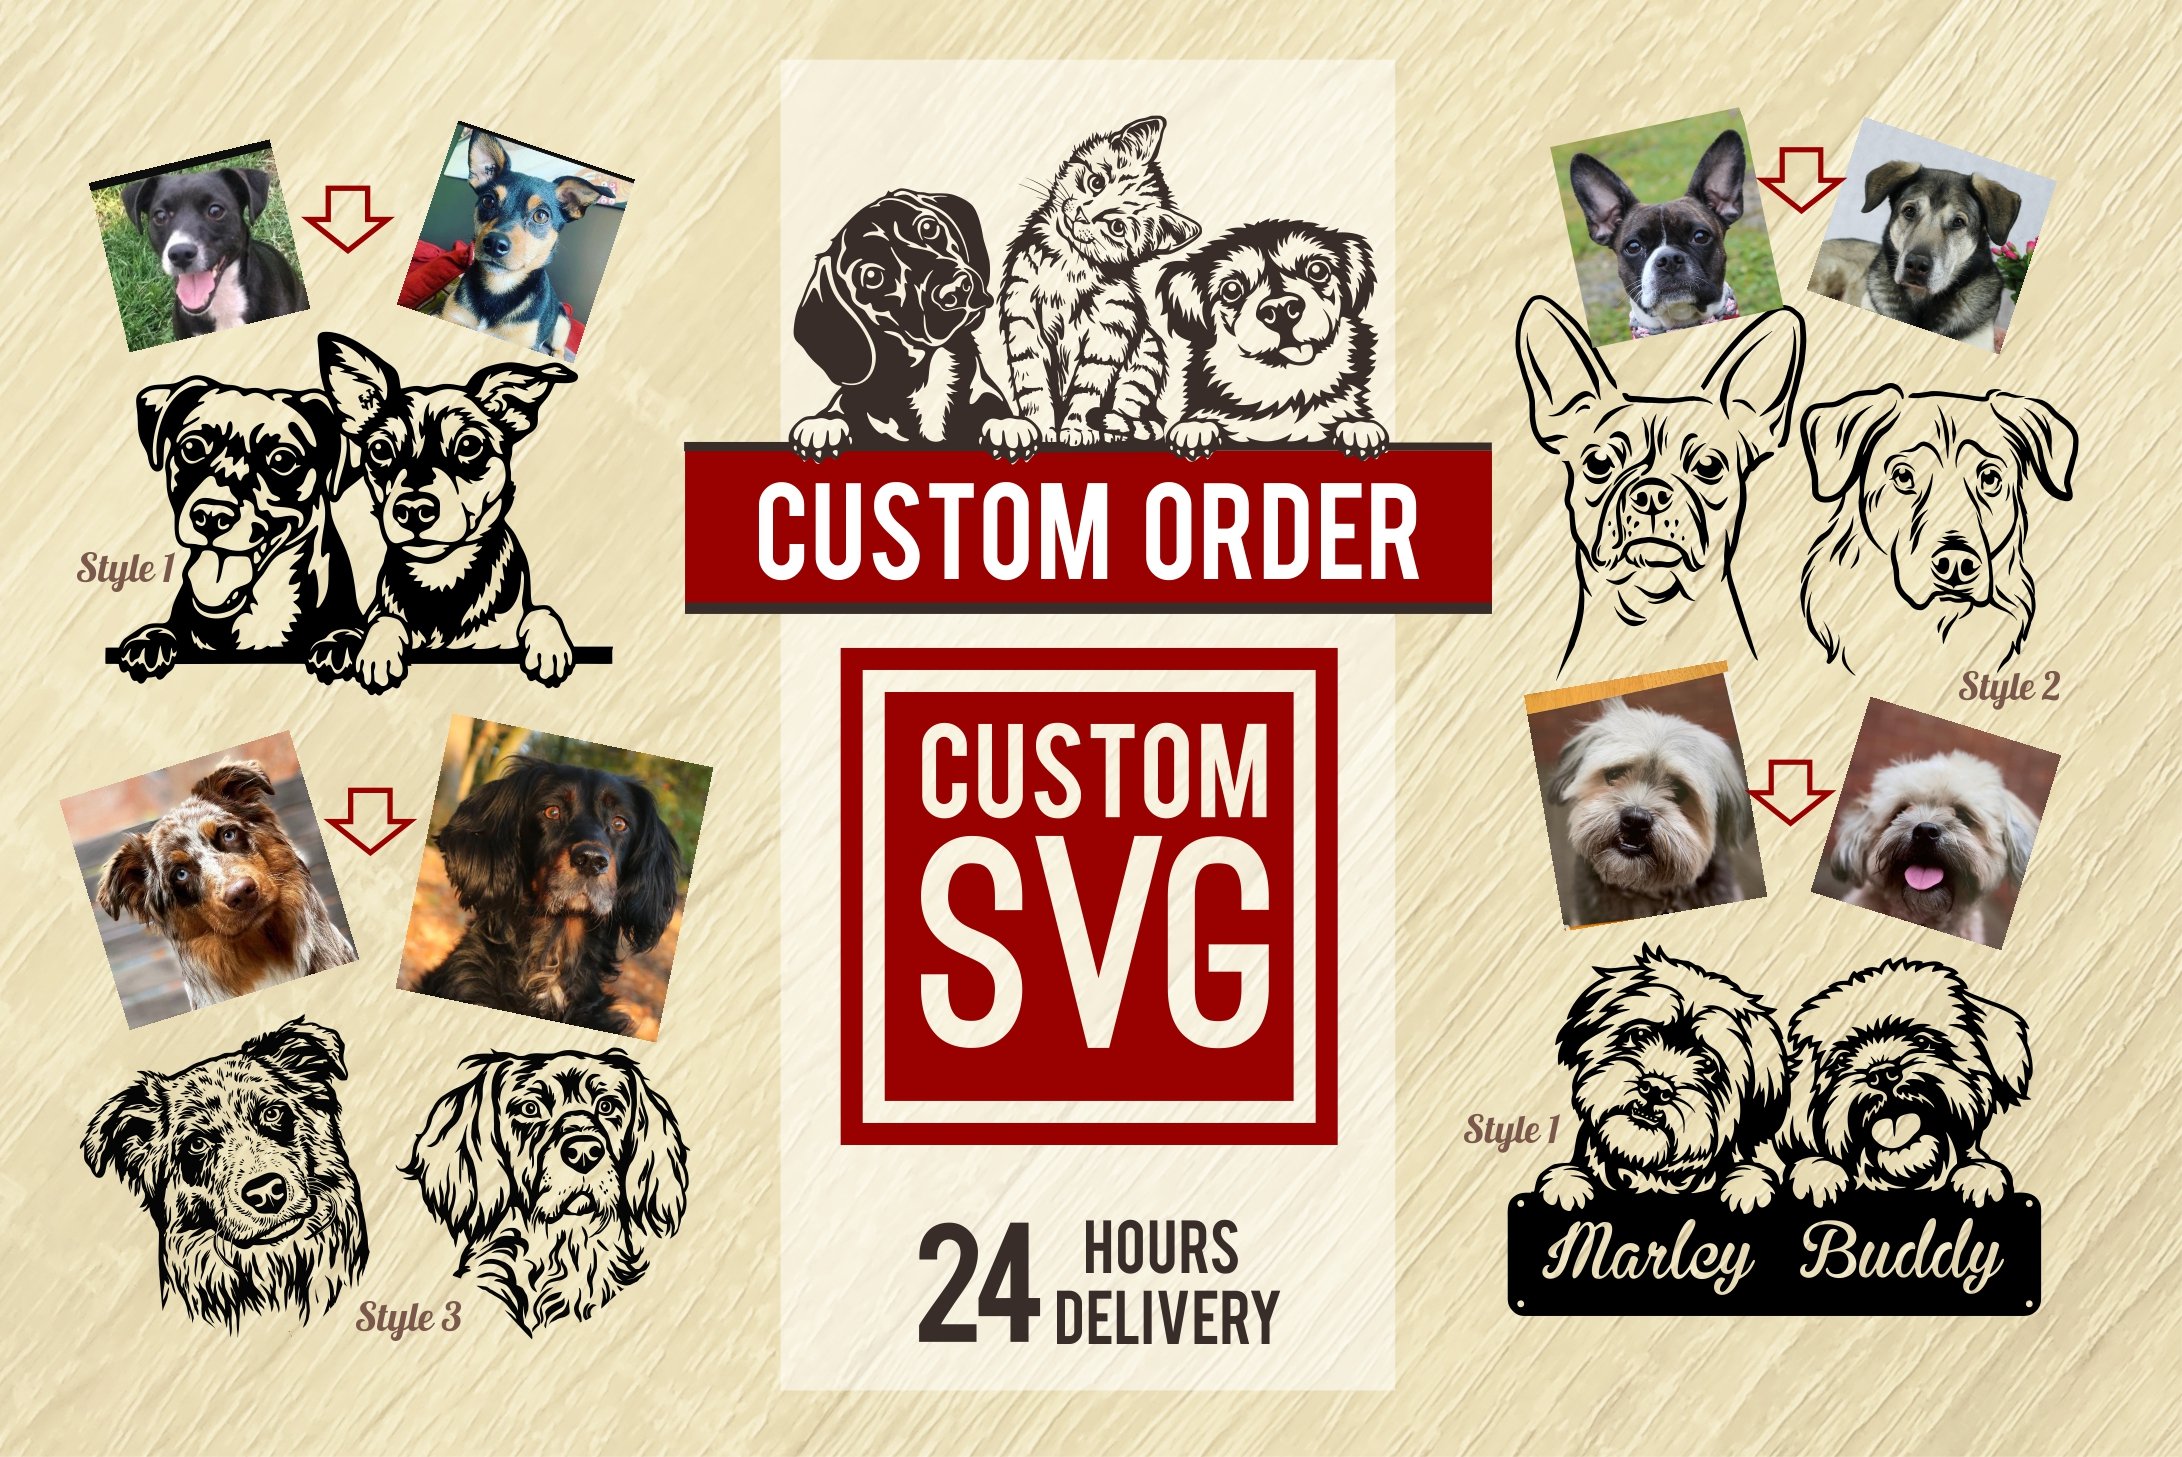 pets custom order service 281229 121